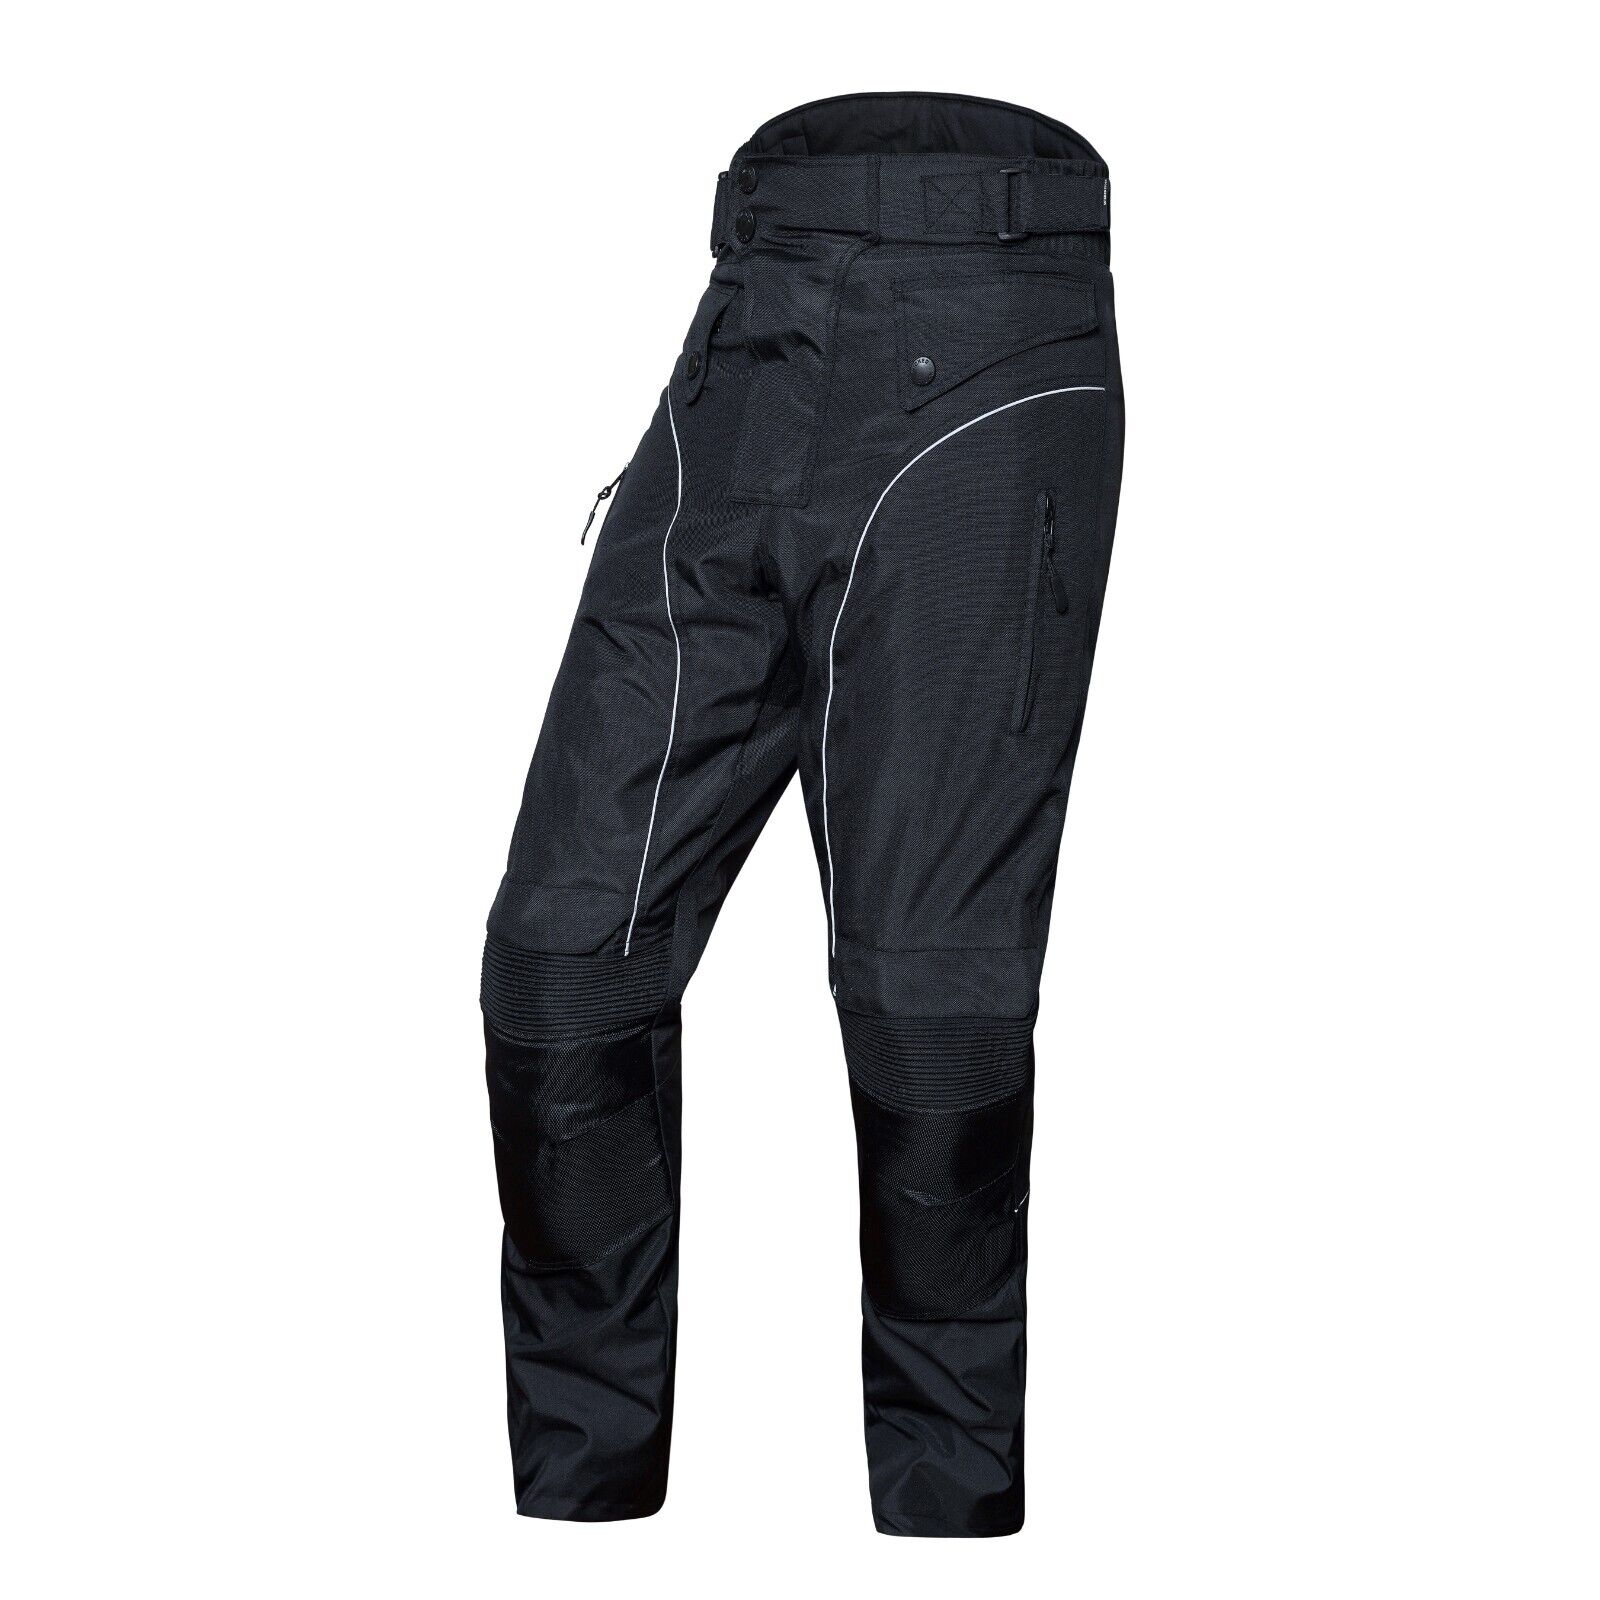 Anchorage Men's Textile Waterproof Riding Pants